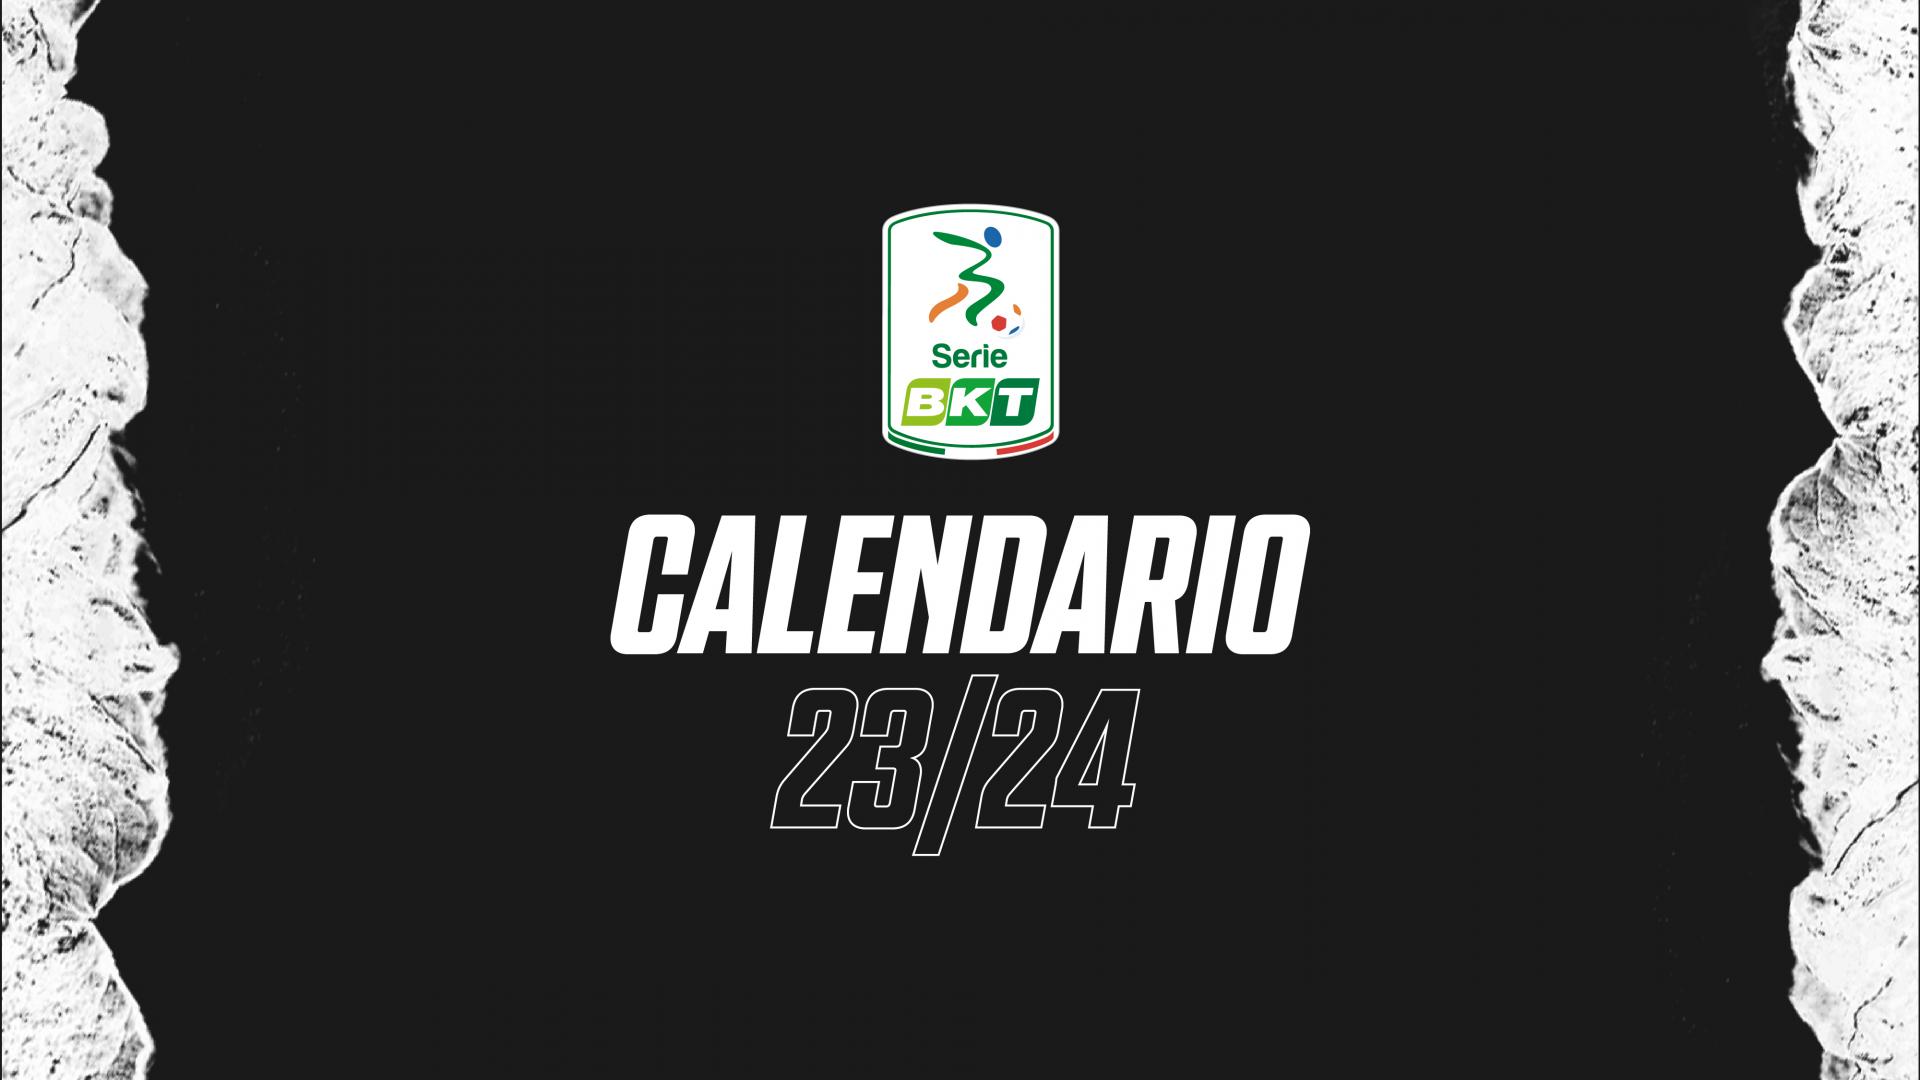 Serie BKT calendar 2023/24: for the Eagles debut on the field of Sudtirol